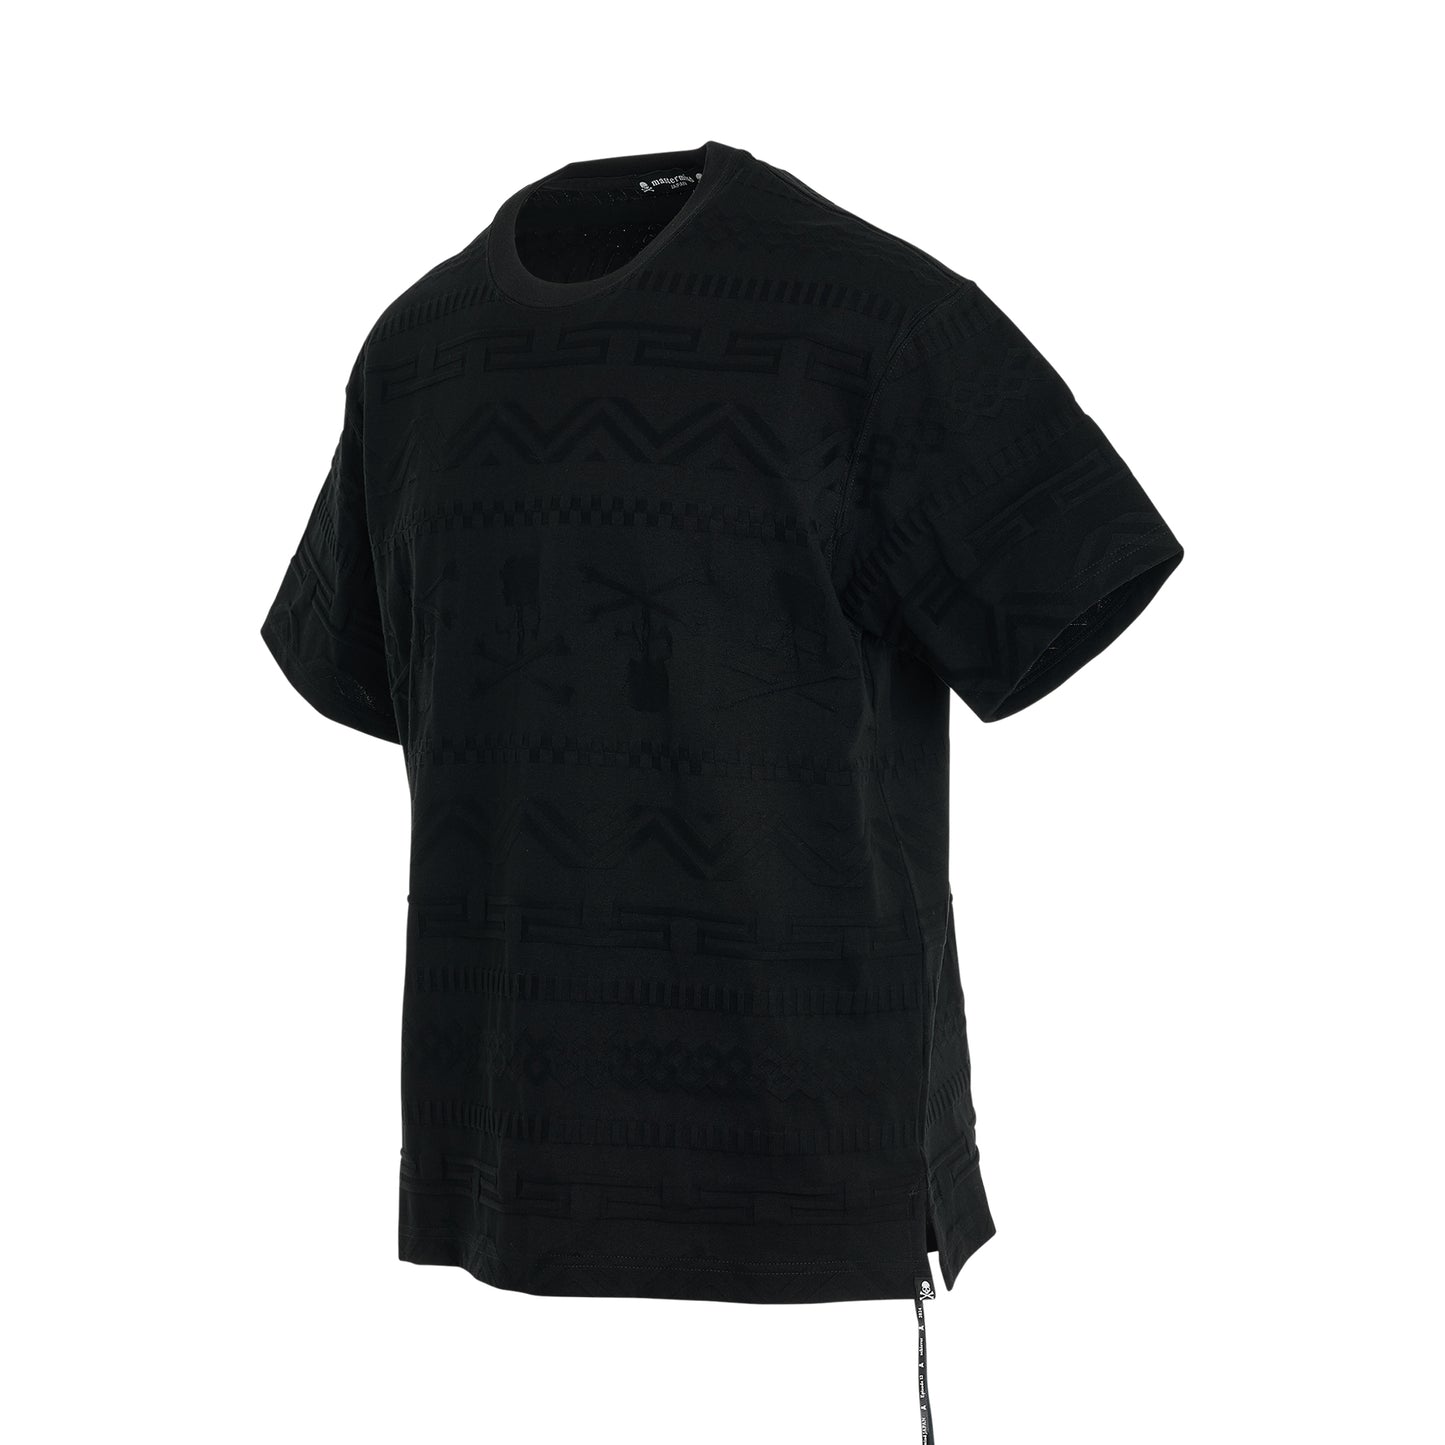 Links Jacquard T-Shirt in Black